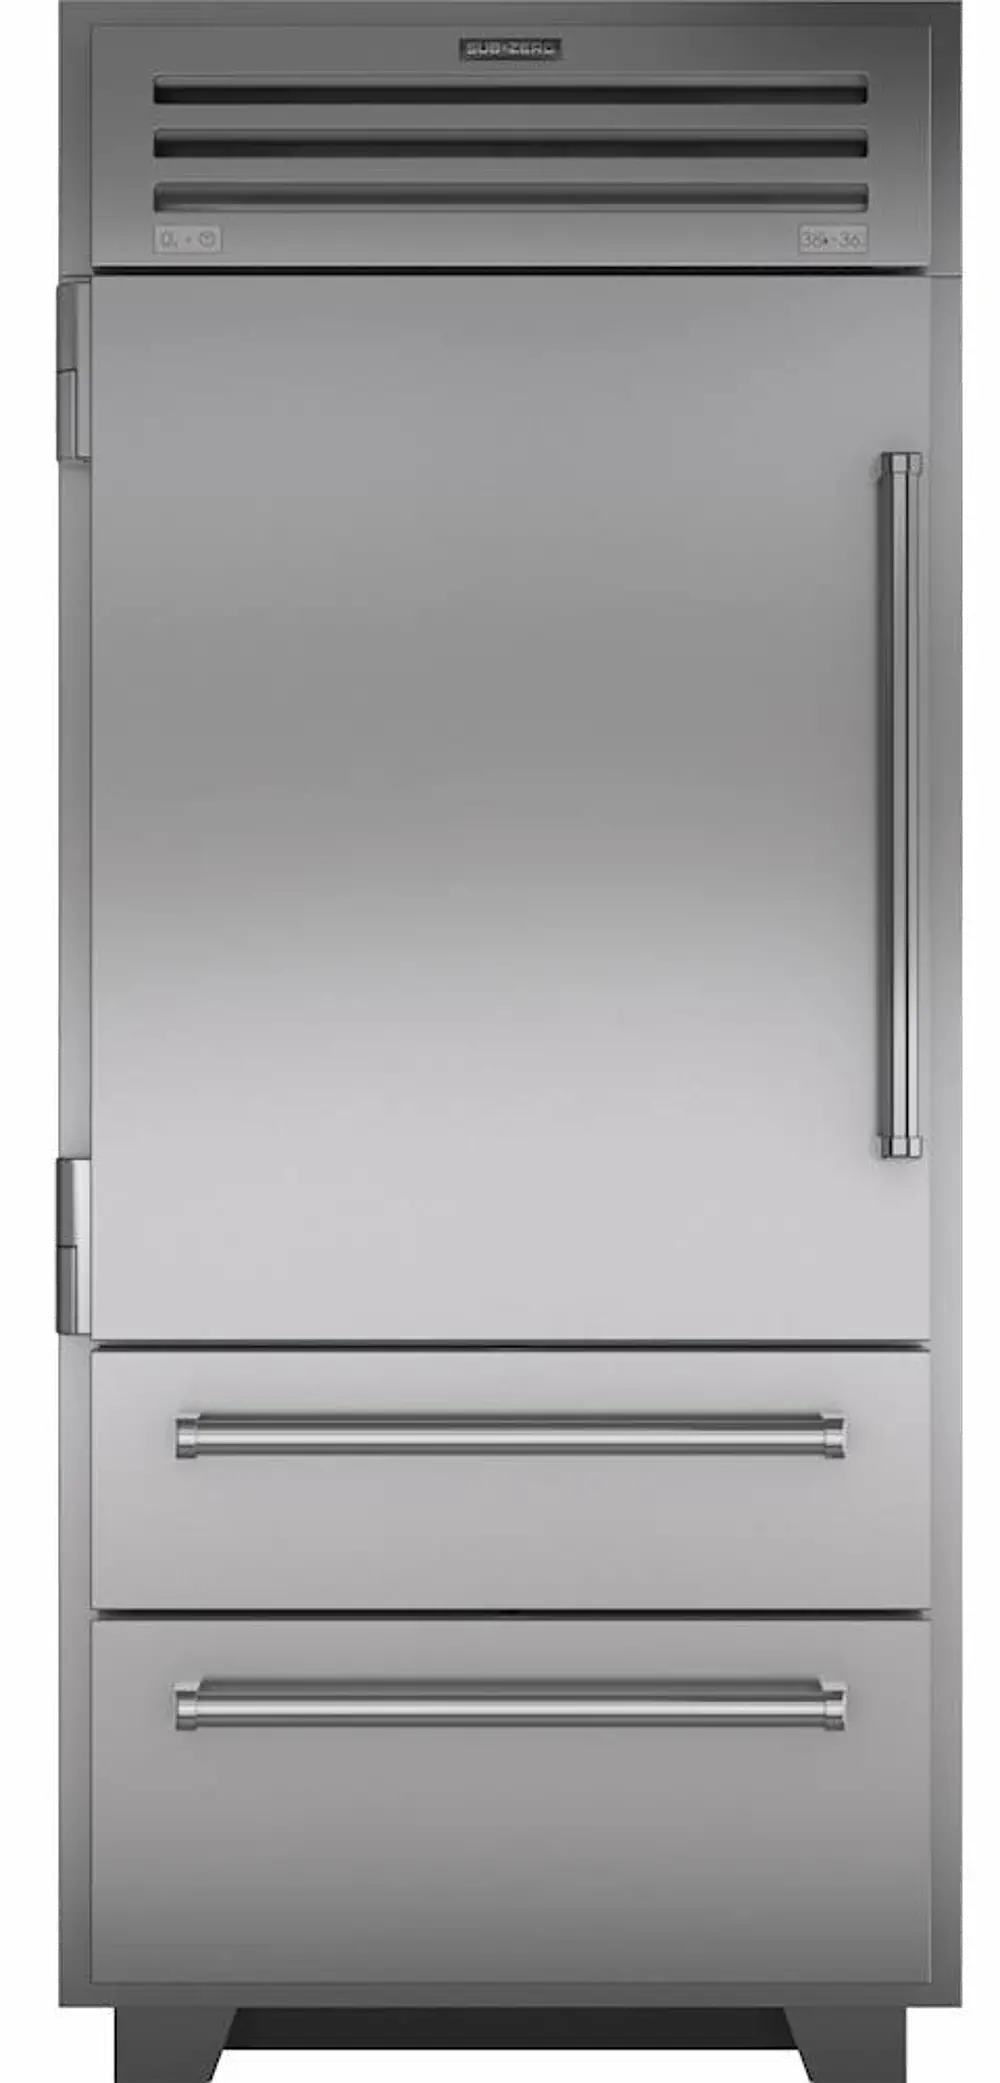 PRO3650/LH Sub-Zero 36 Inch Professional Bottom Freezer Refrigerator - Left Hinge-1